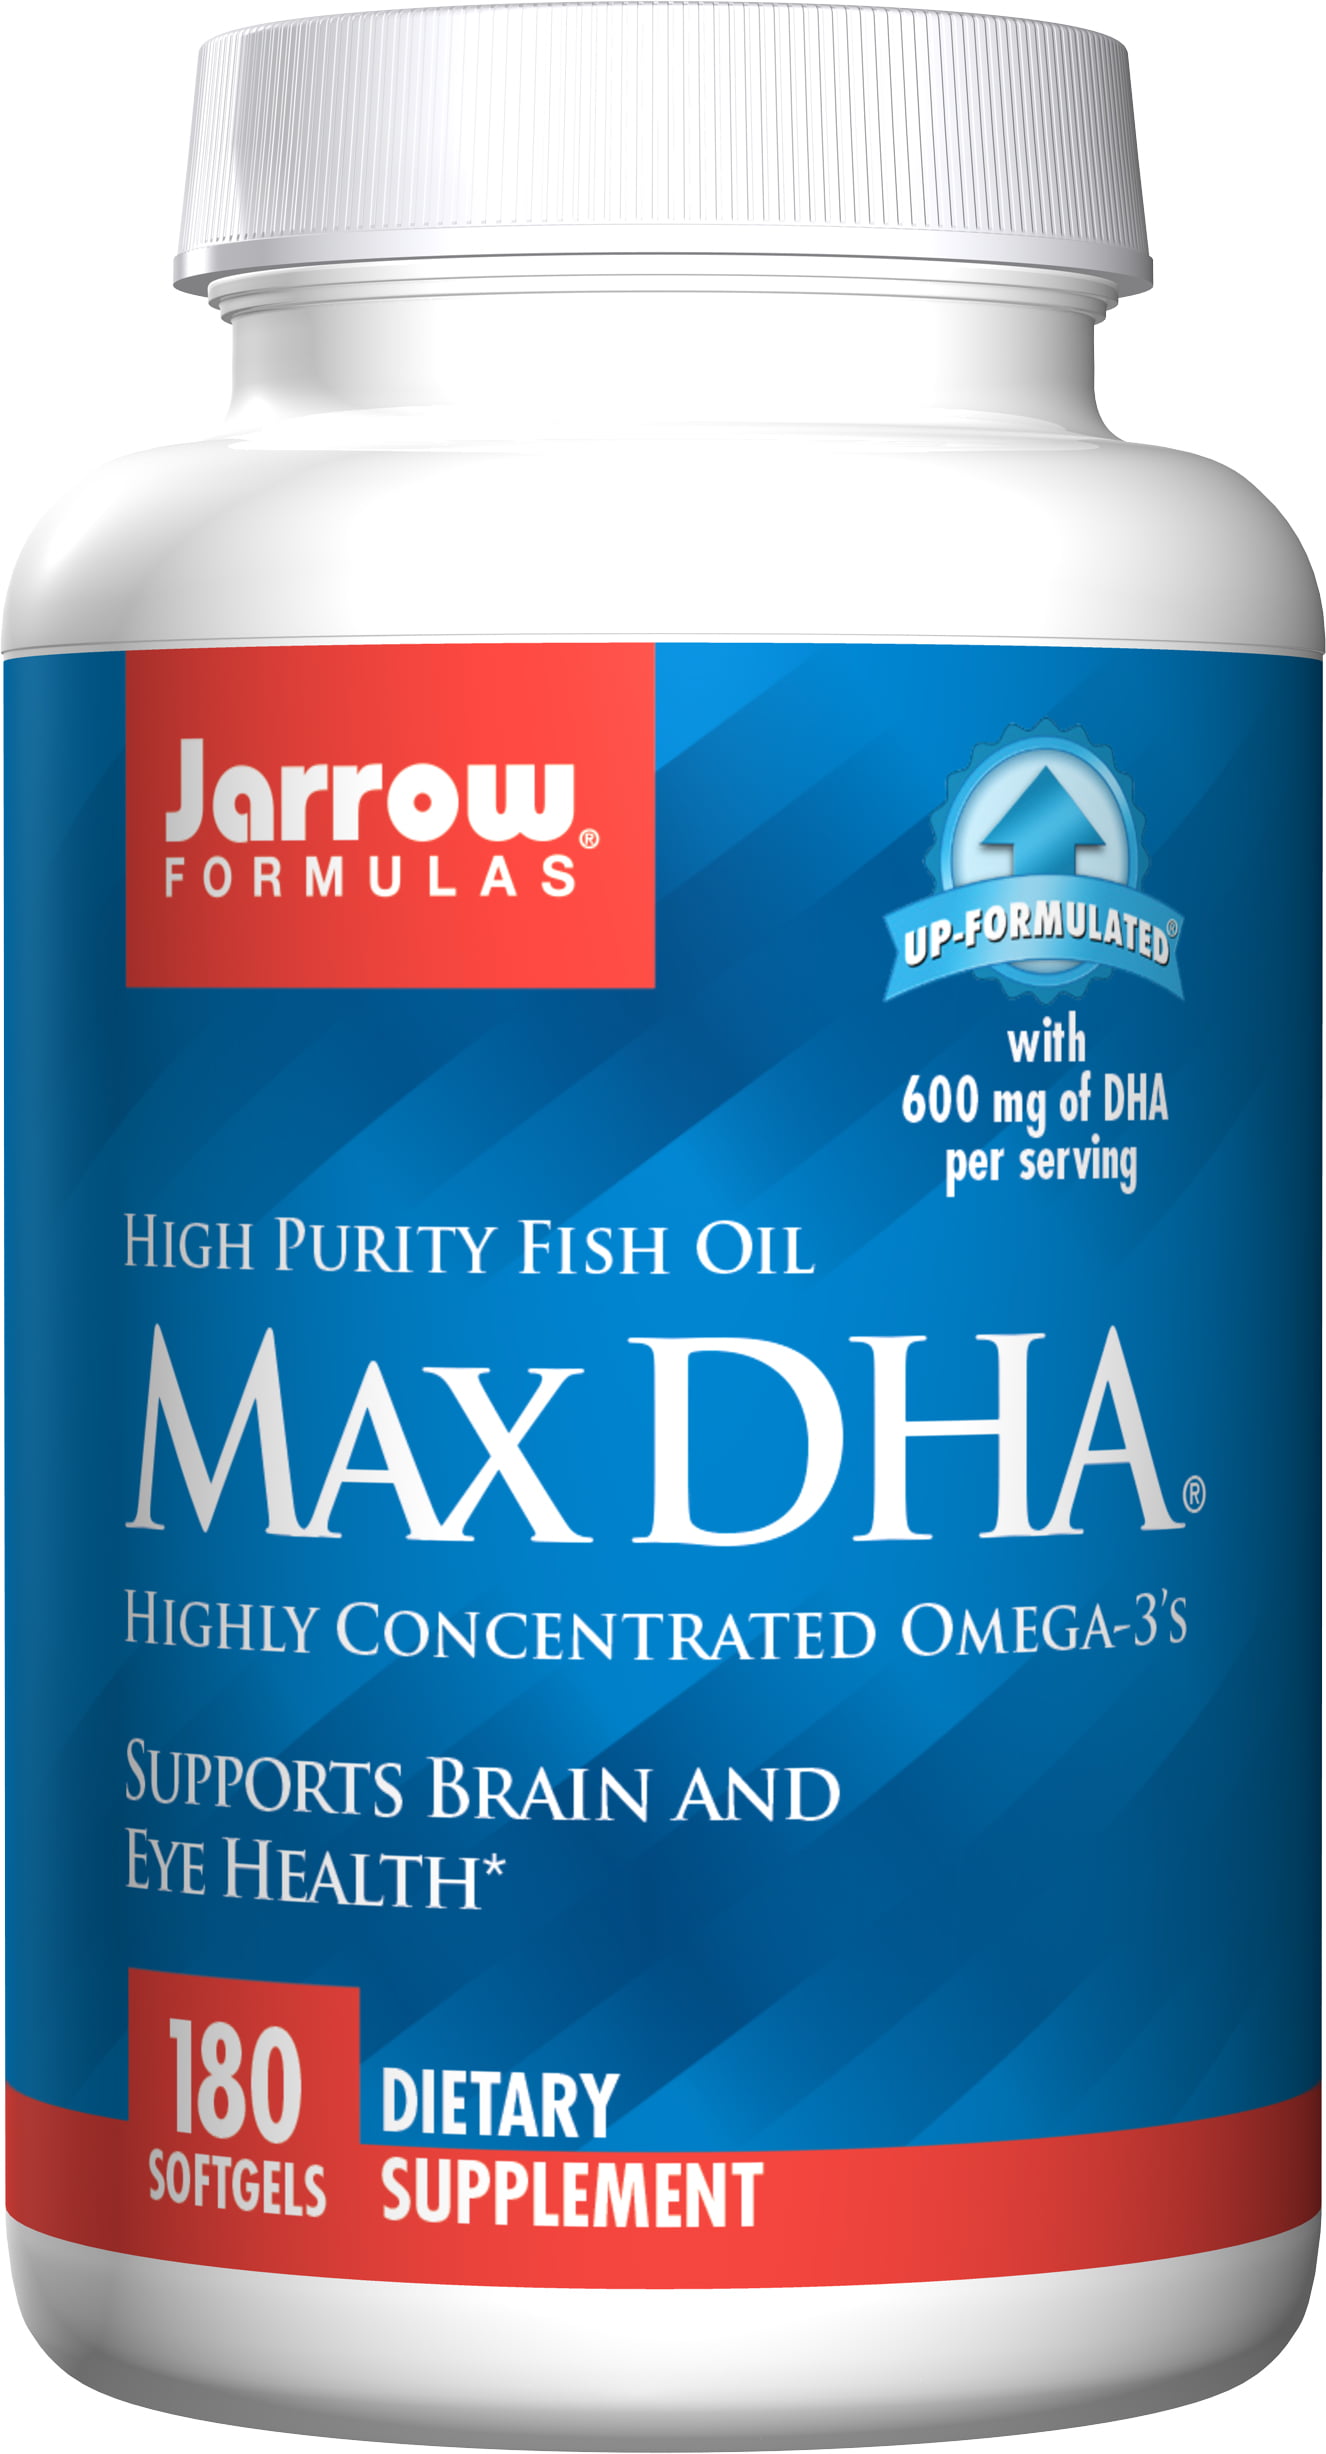 Jarrow Formulas Max DHA, Supports Brain and Eye Health,180 Softgels